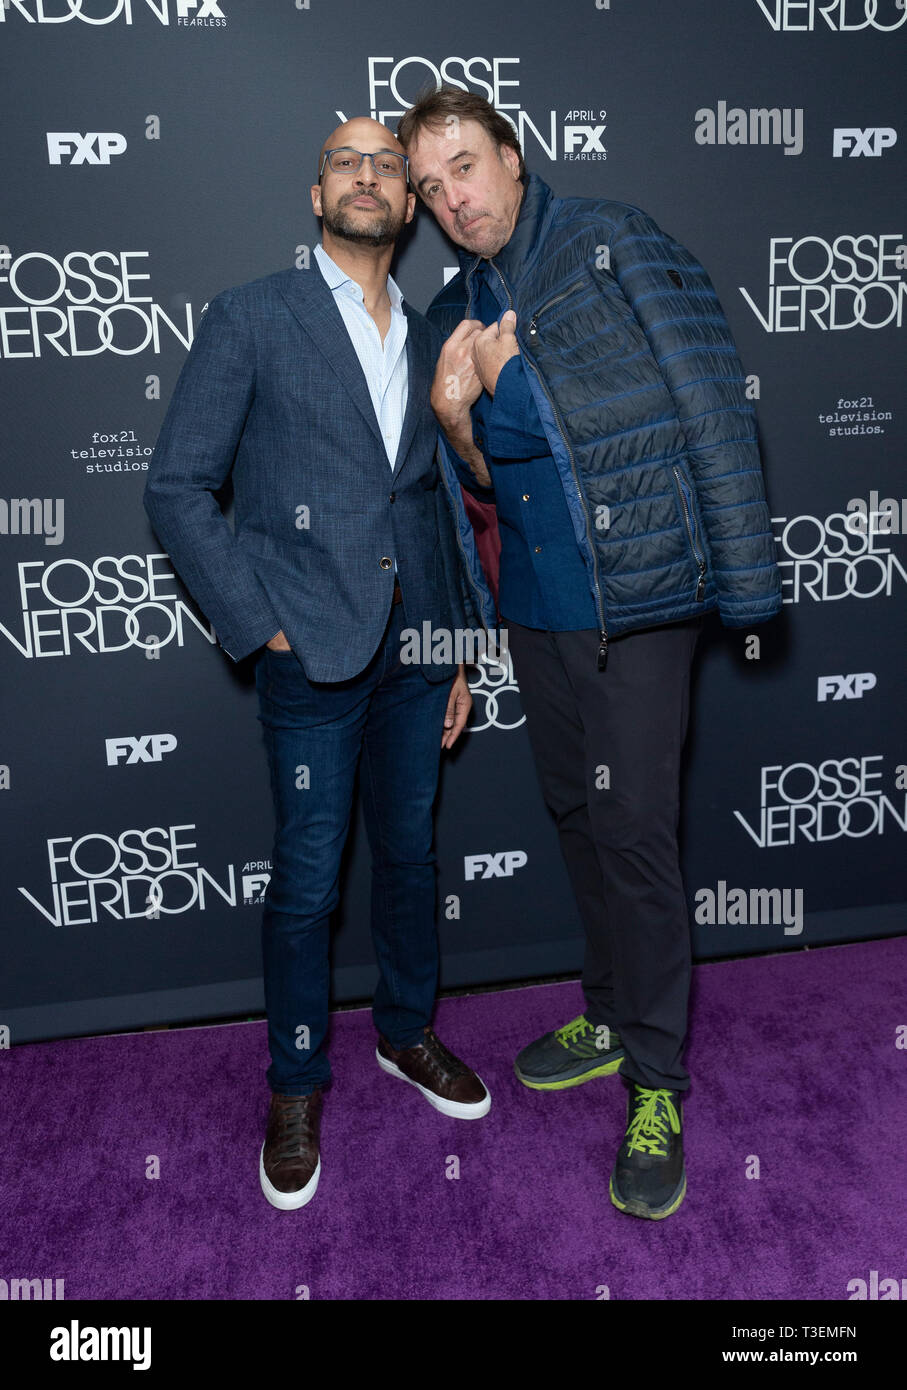 New York, NY - April 8, 2019: Keegan-Michael Key, Kevin Nealon attend premiere Fosse/Verdon by FX Network at Gerald Schoenfeld Theatre Stock Photo